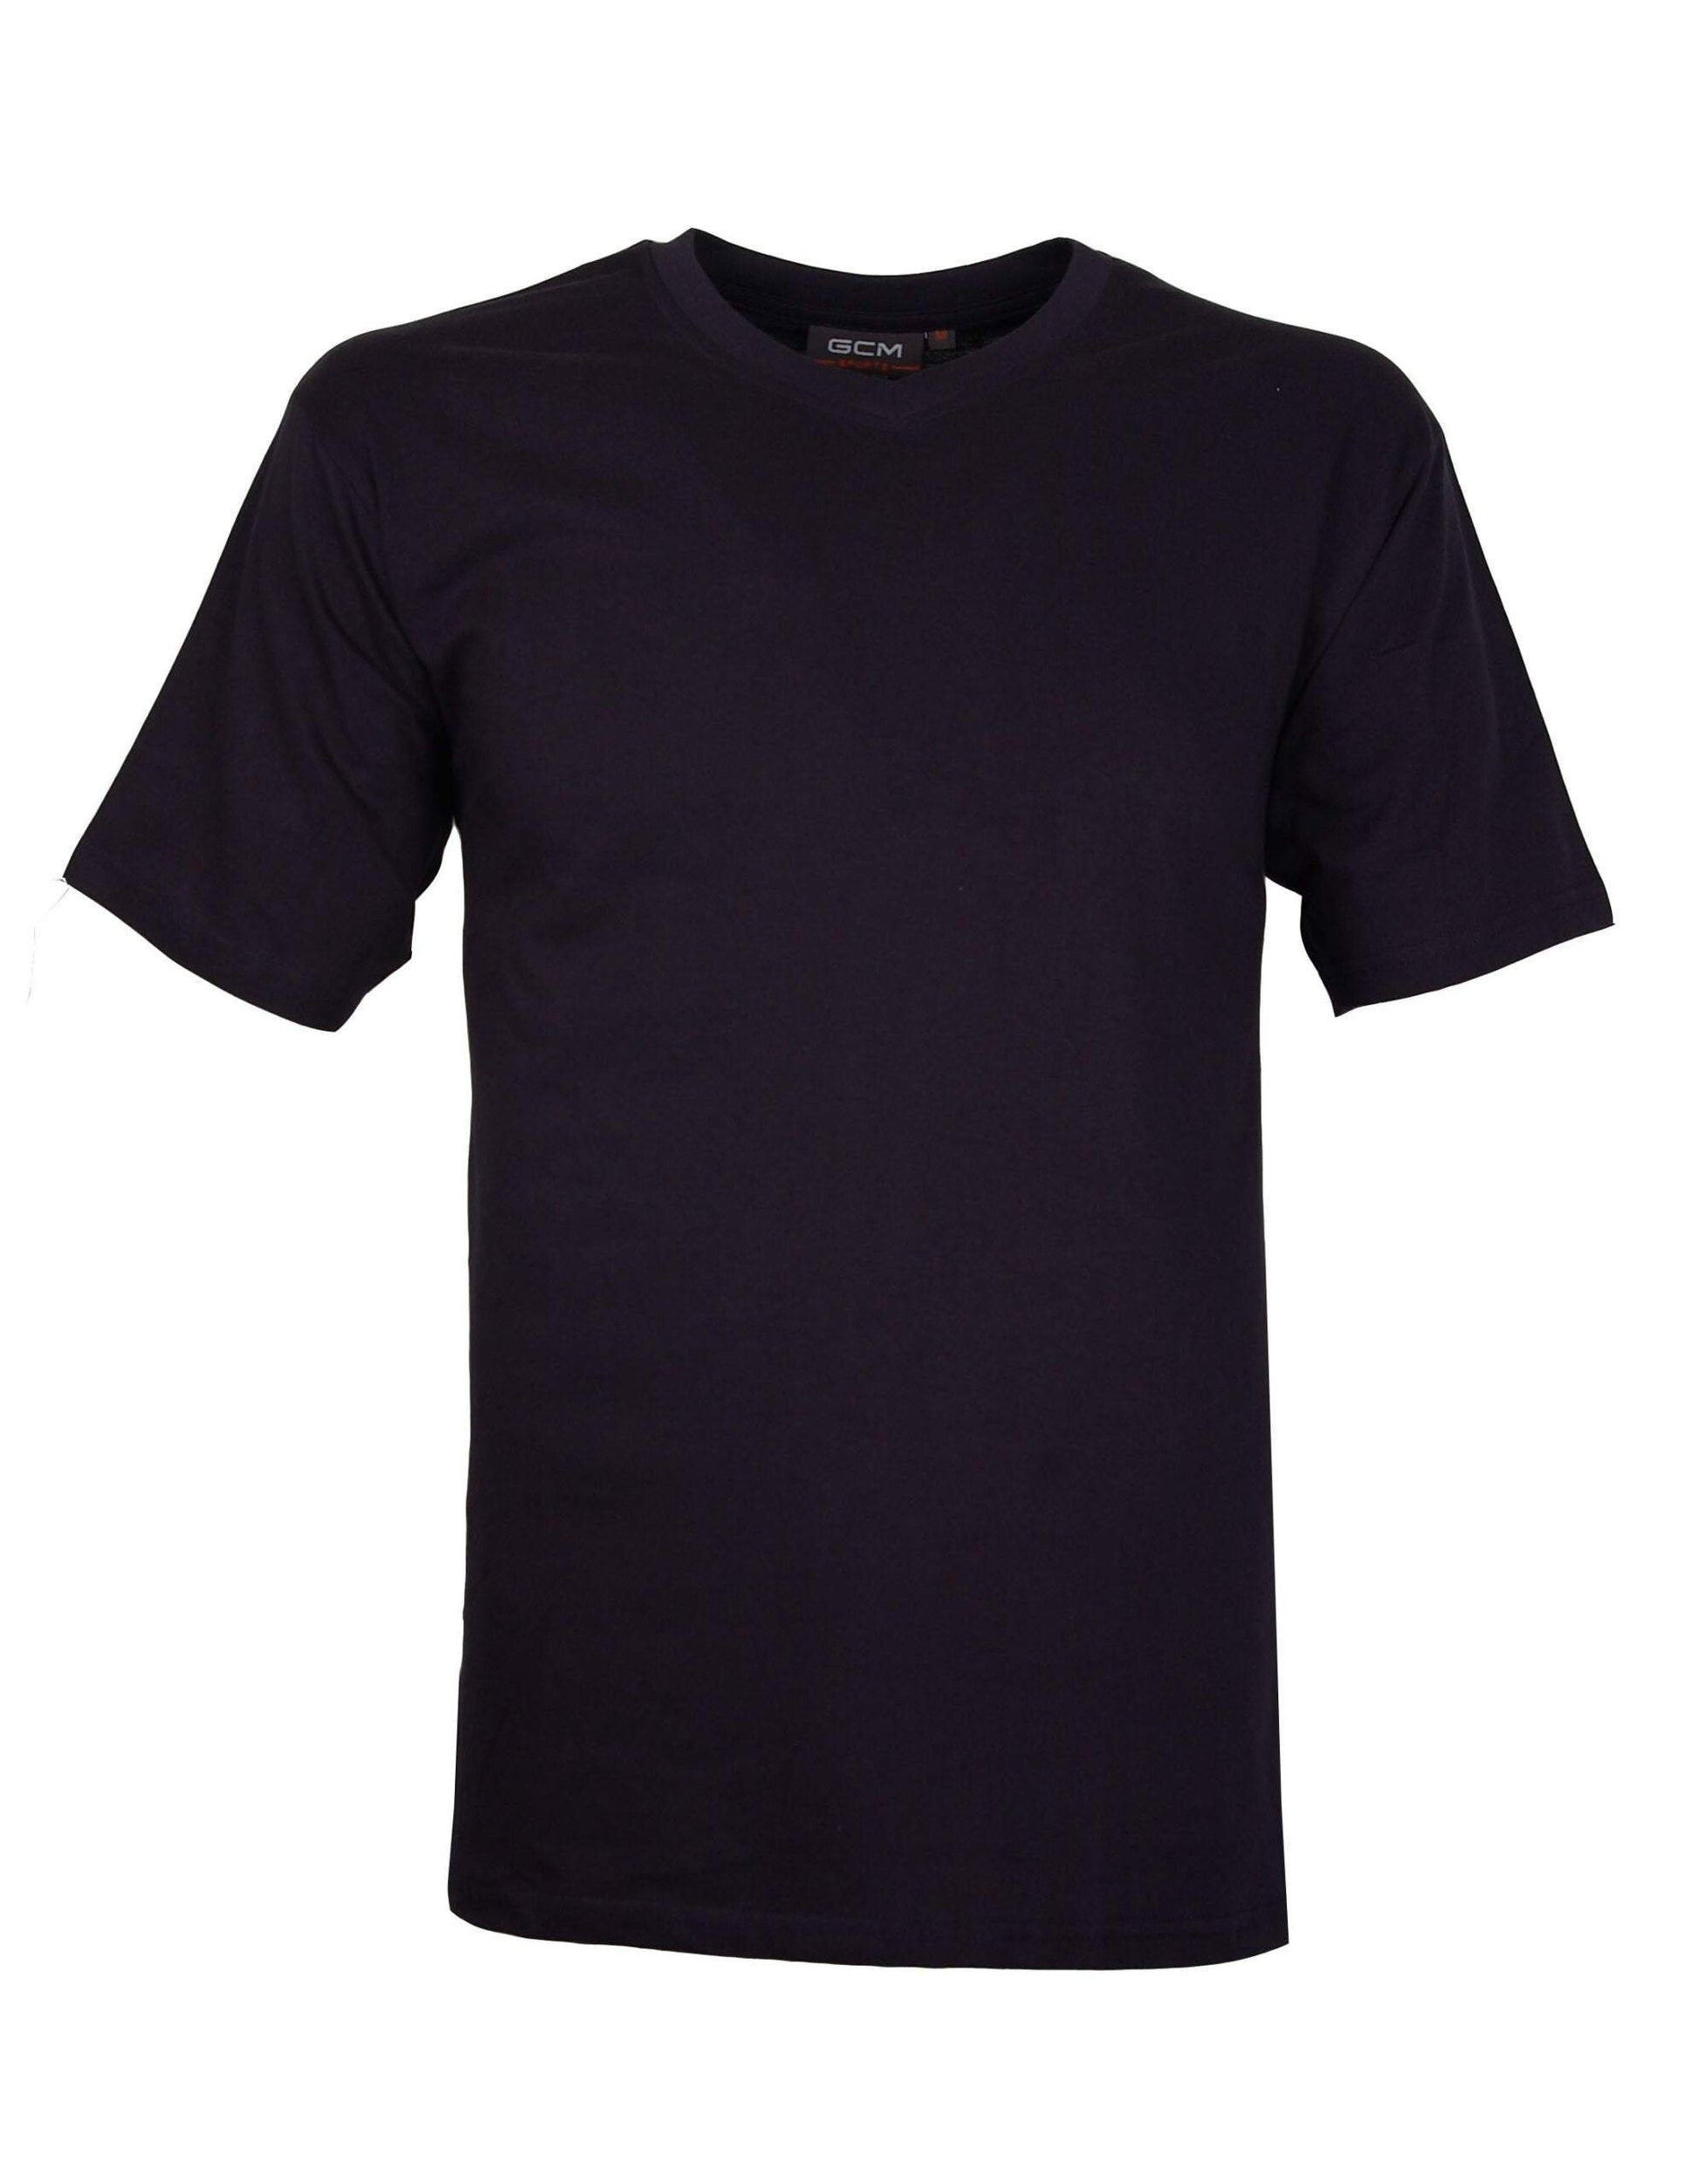 GCM original t-shirt V-hals navy-Broeken Binkie-Grote maten,grote maten kleding,Grote Maten tops,grote tops,Shirts,V hals